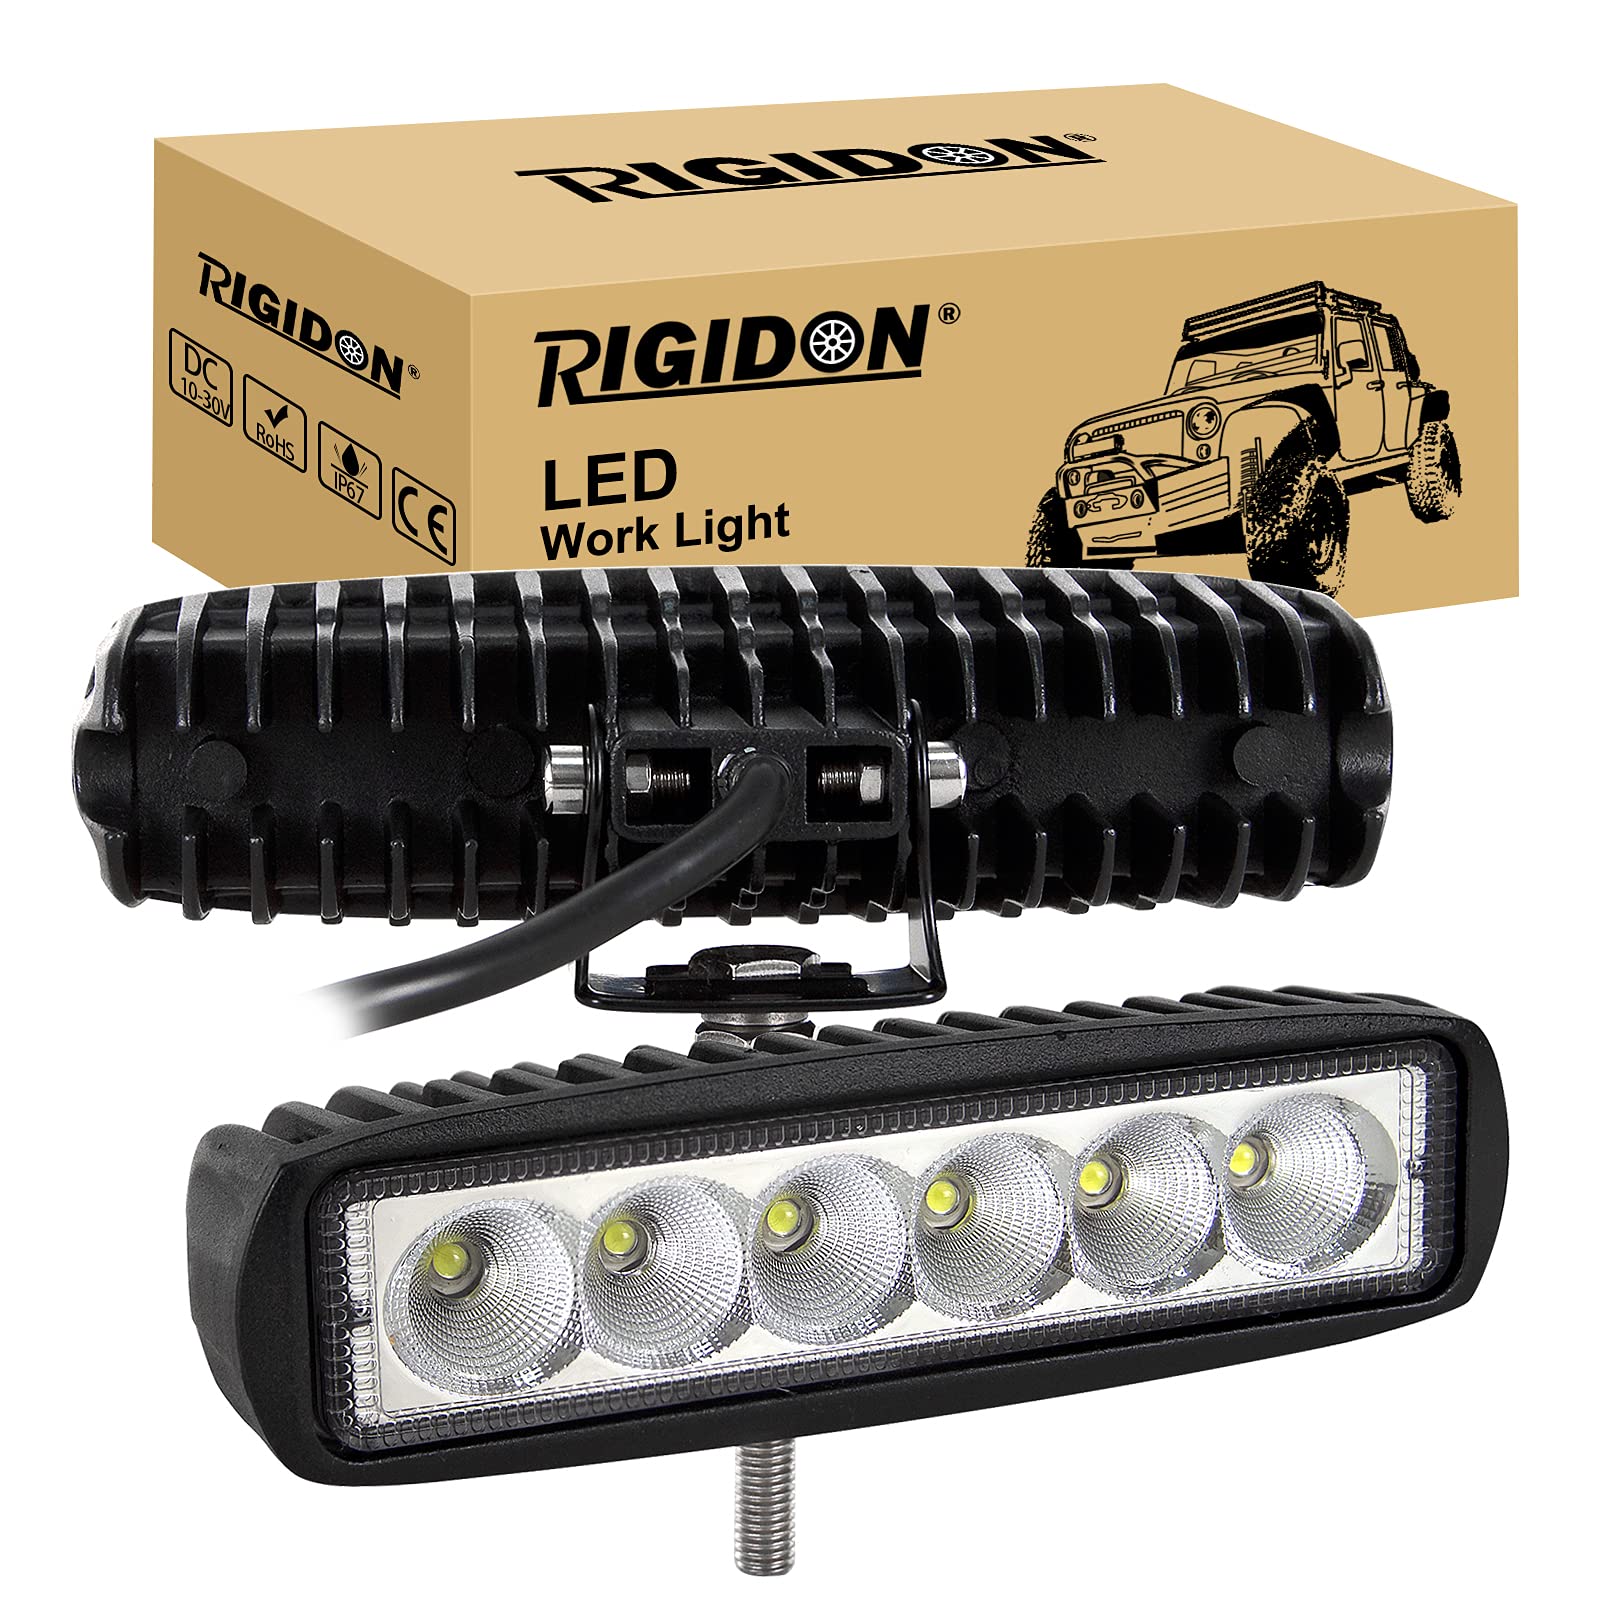 RIGIDON 2 Pcs led lichtleiste, 18W 6 Zoll 15cm led flutstrahler offroad beleuchtung für Auto SUV ATV, Traktor, LKW, 4x4 6000K Weiß led nebelscheinwerfer, led arbeitsscheinwerfer, led arbeitslicht von RIGIDON